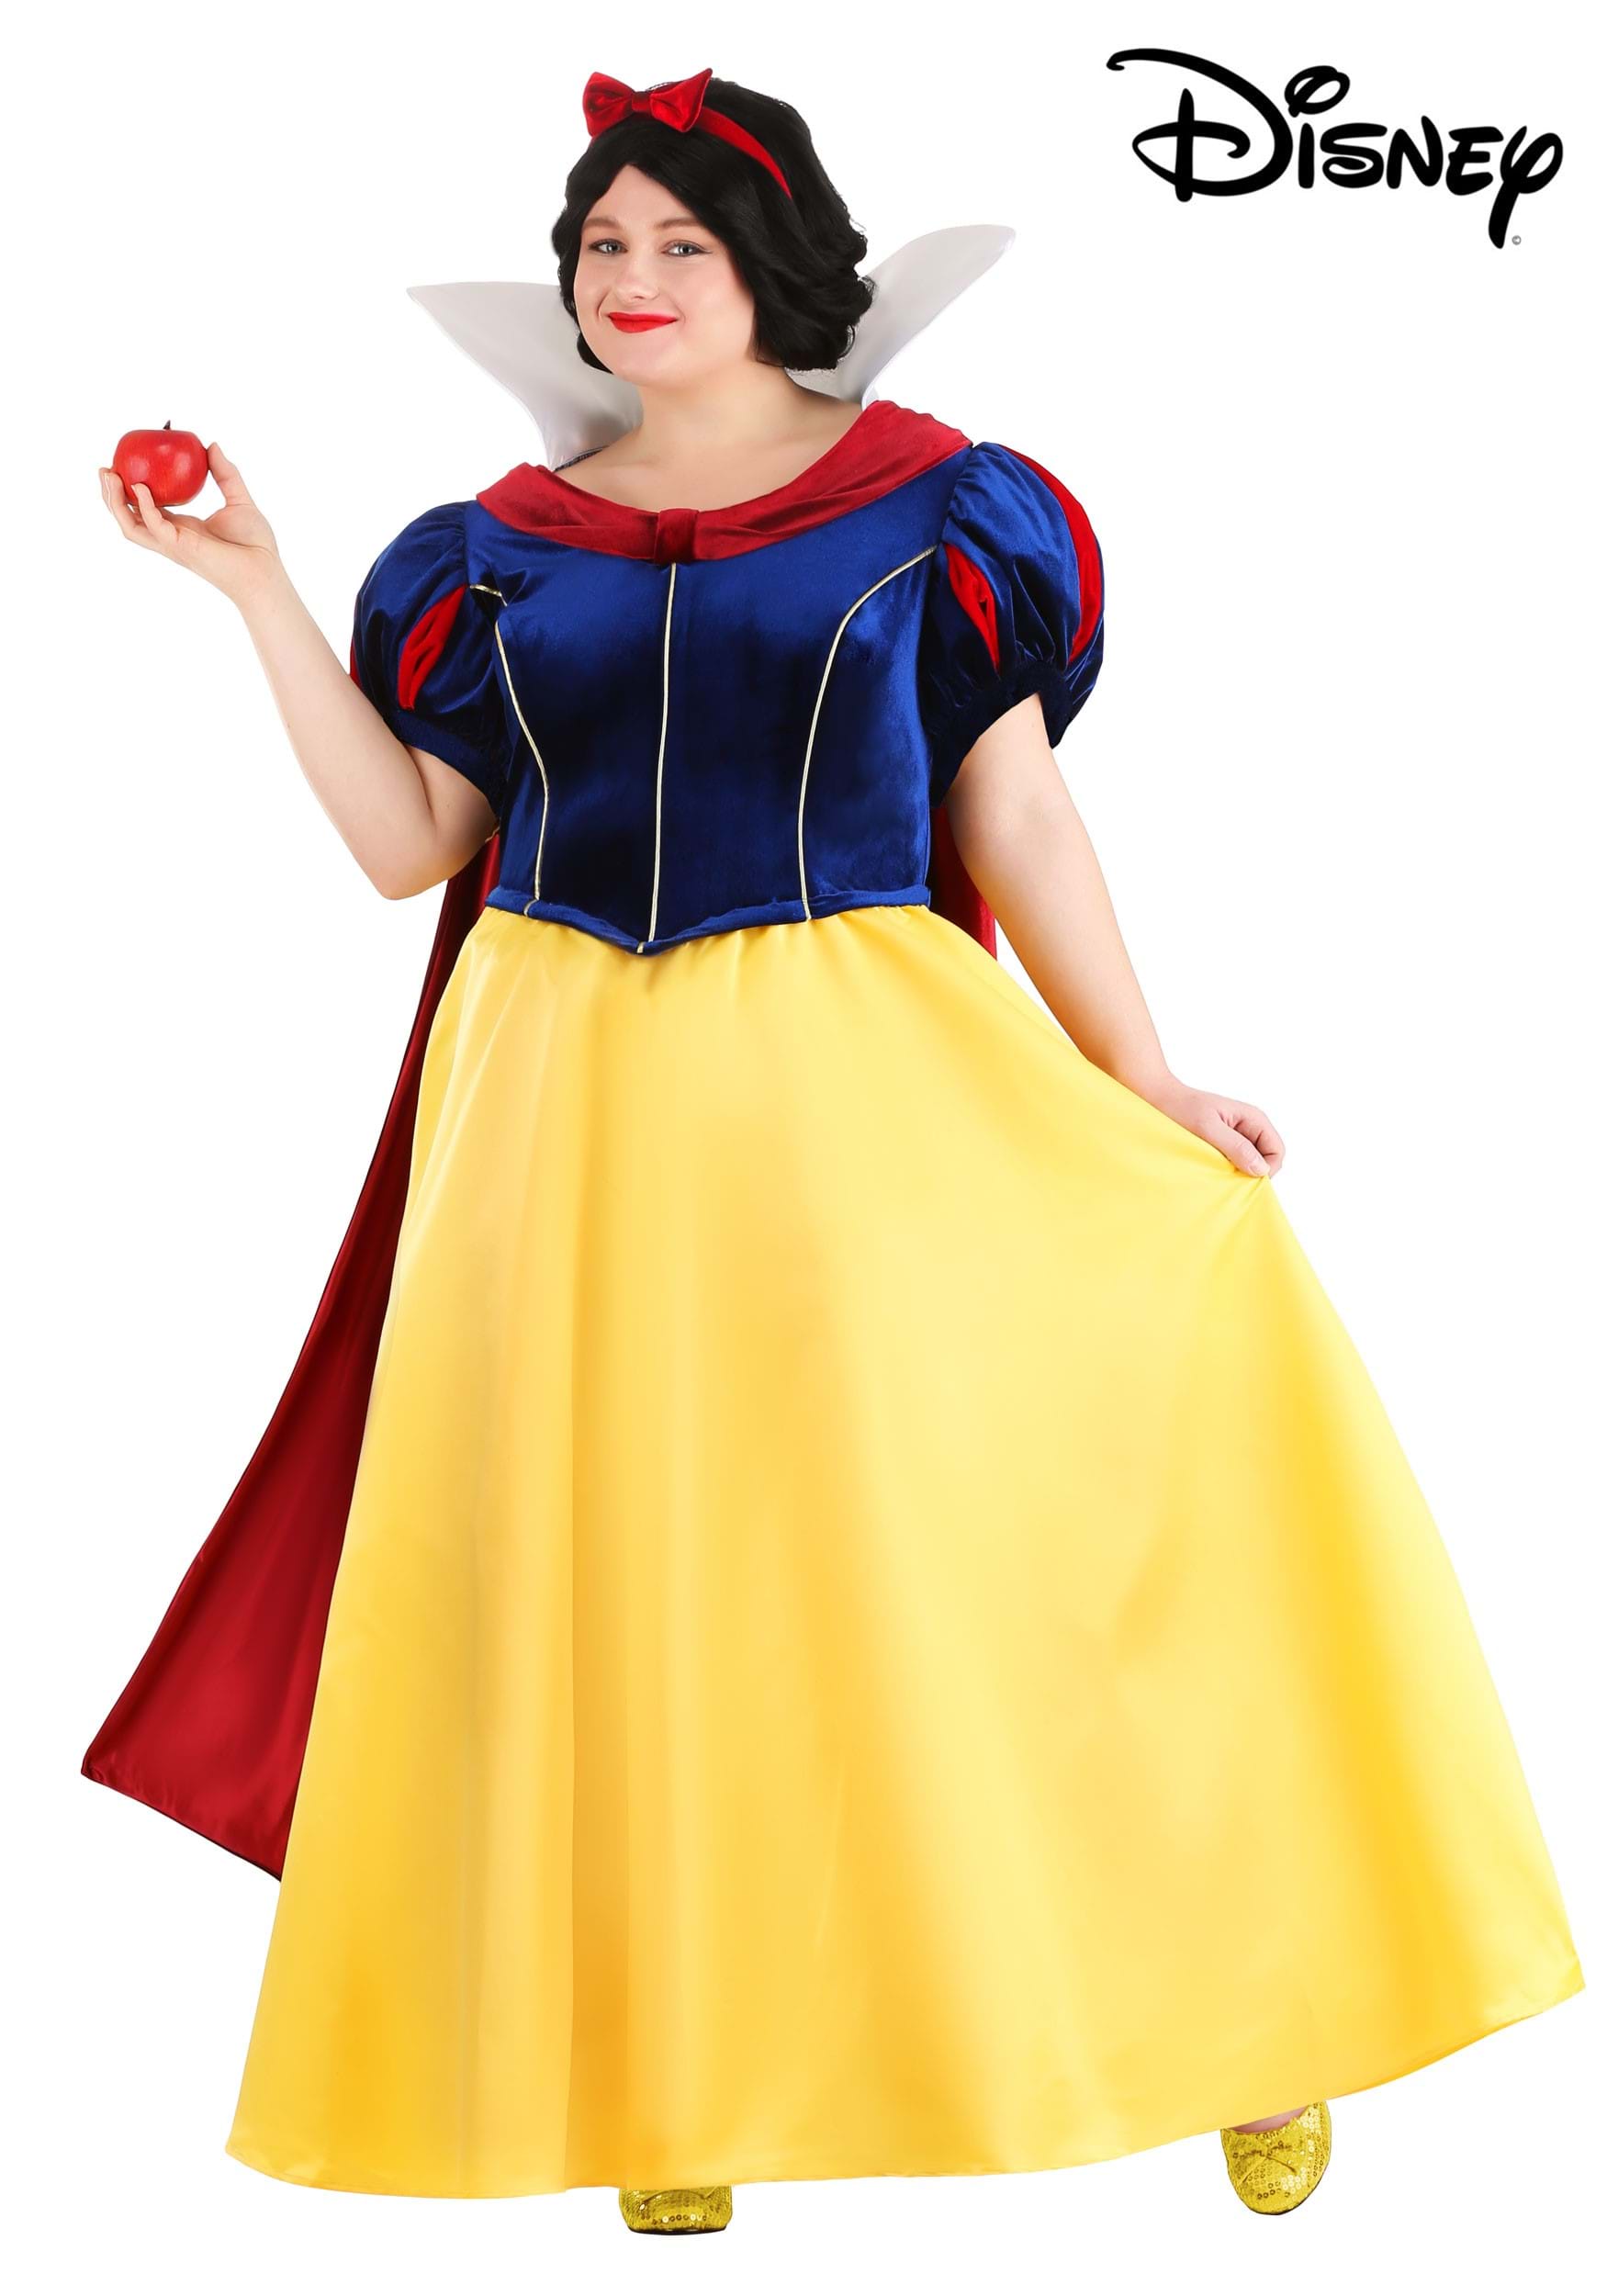 Plus size Disney costumes that go up to 5X+ #plussizecostumes #hallowe